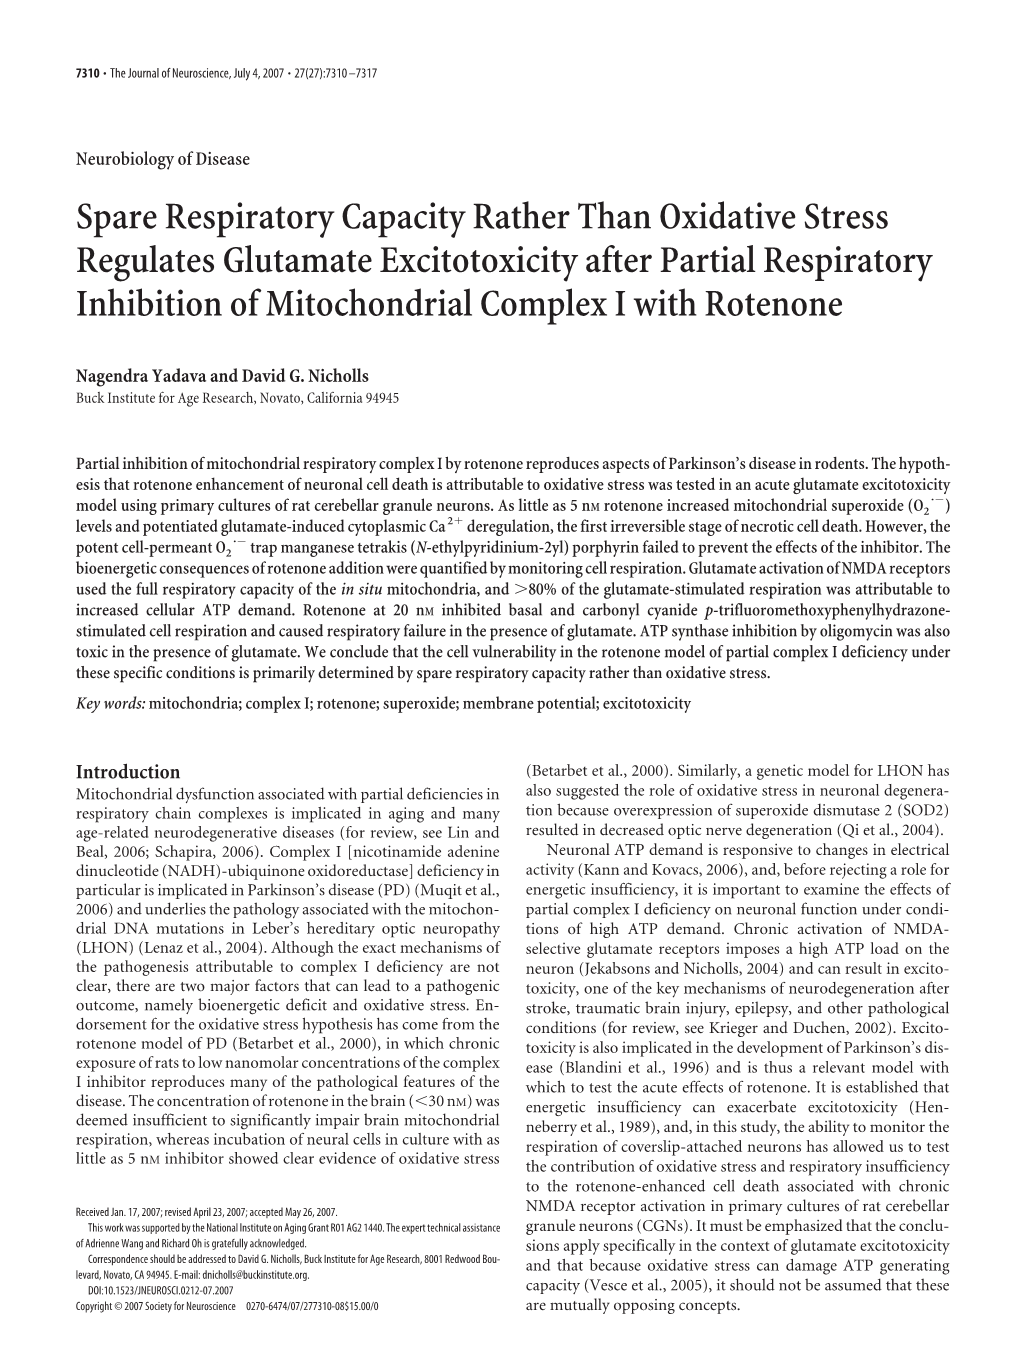 Spare Respiratory Capacity Rather Than Oxidative Stress Regulates